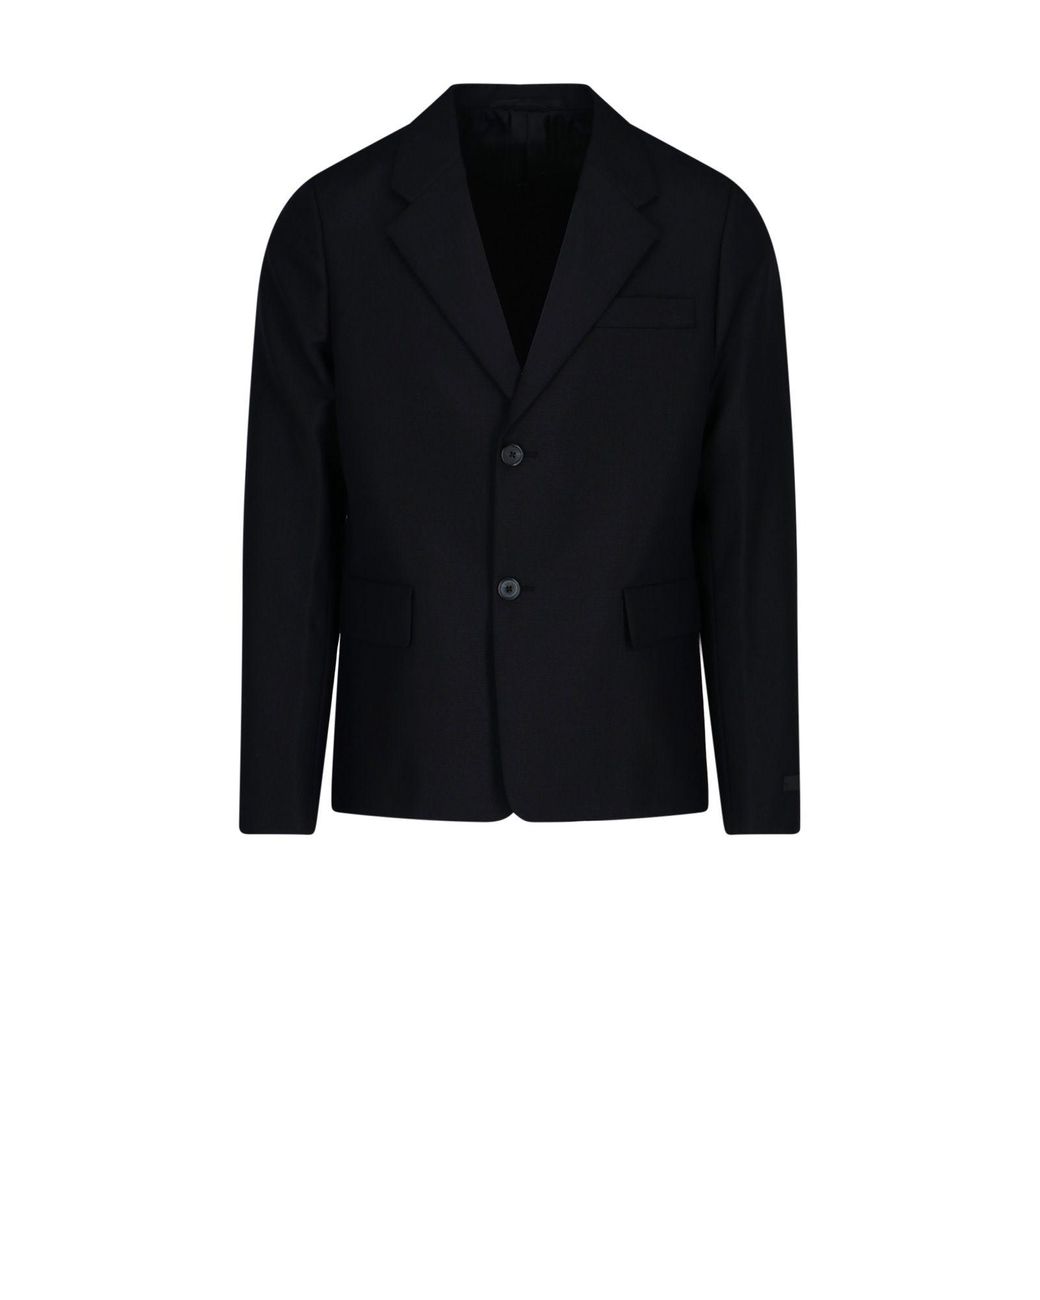 Prada Wool Blazer in Black for Men - Lyst